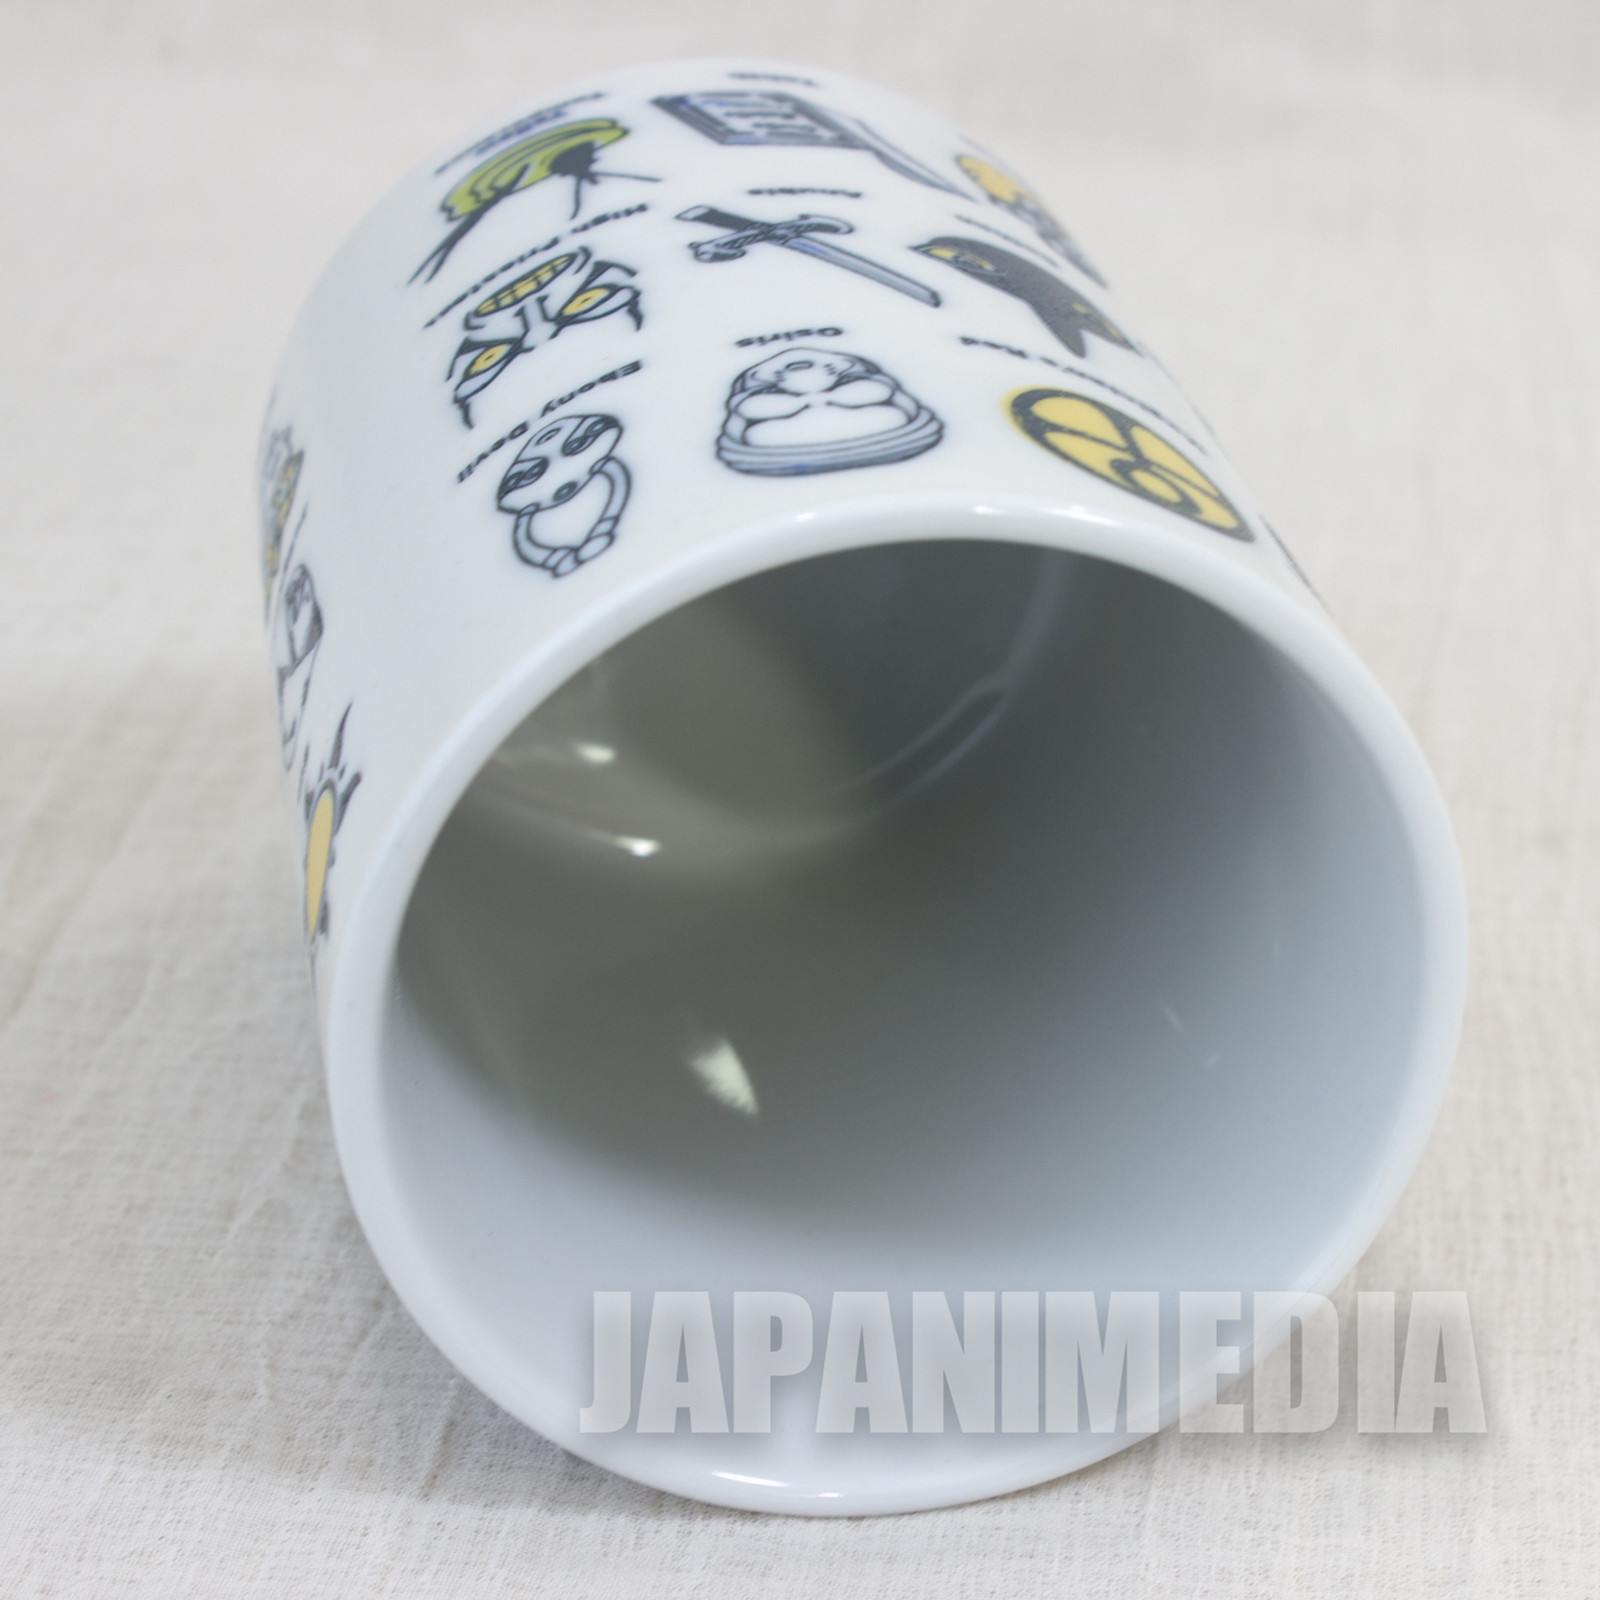 JoJo's Bizarre Adventure Japanese Tea Cup Yunomi Shonen Jump JAPAN ANIME